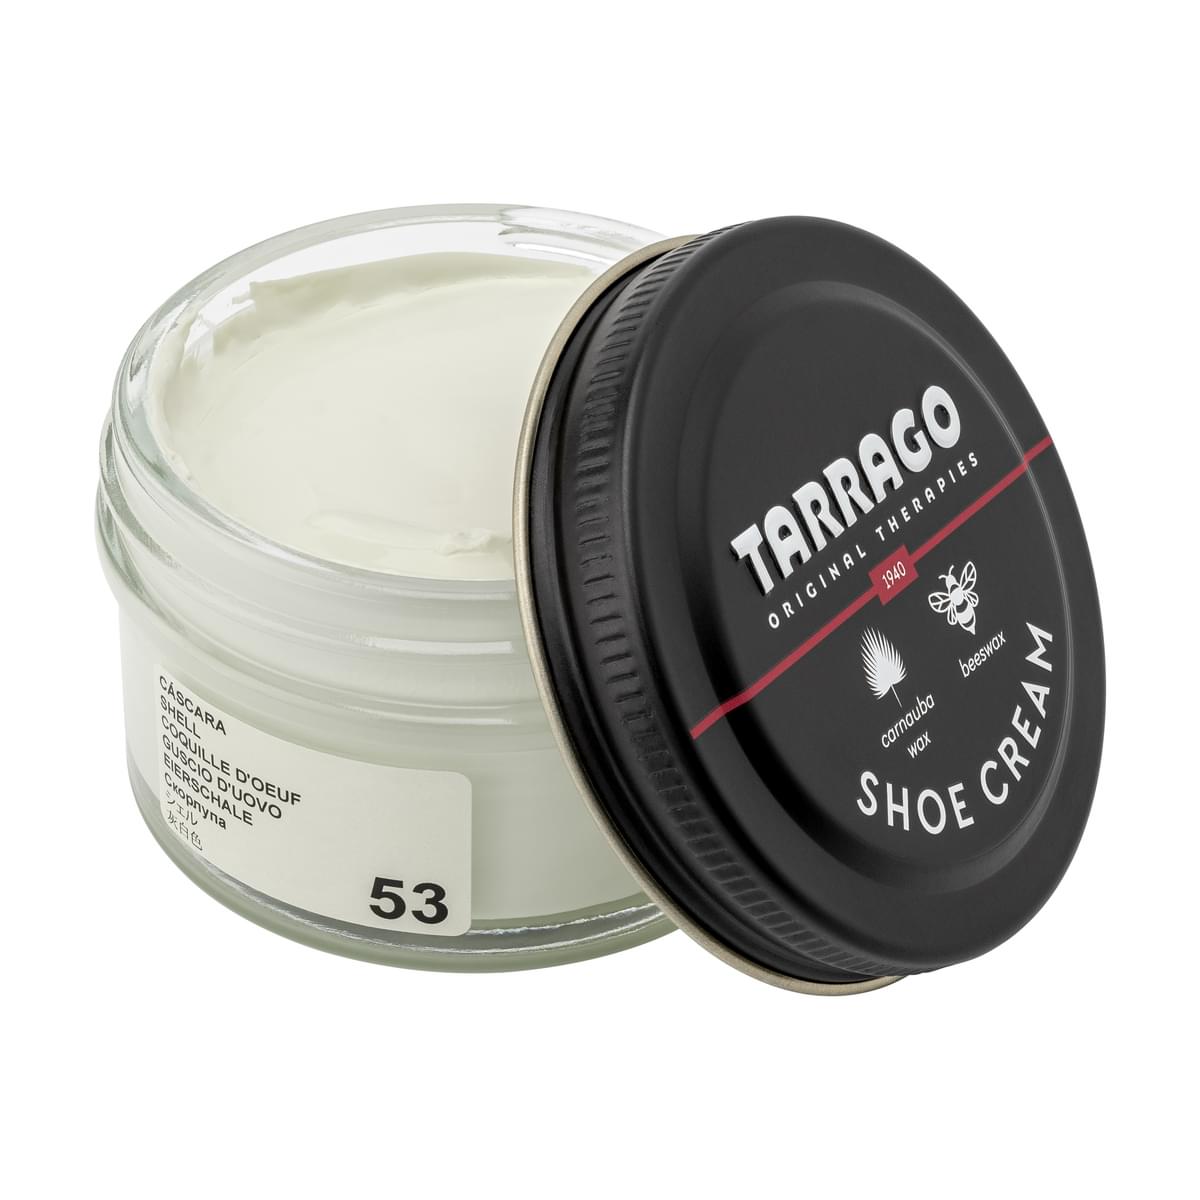 Tarrago Shoe Cream  - Shell - 53